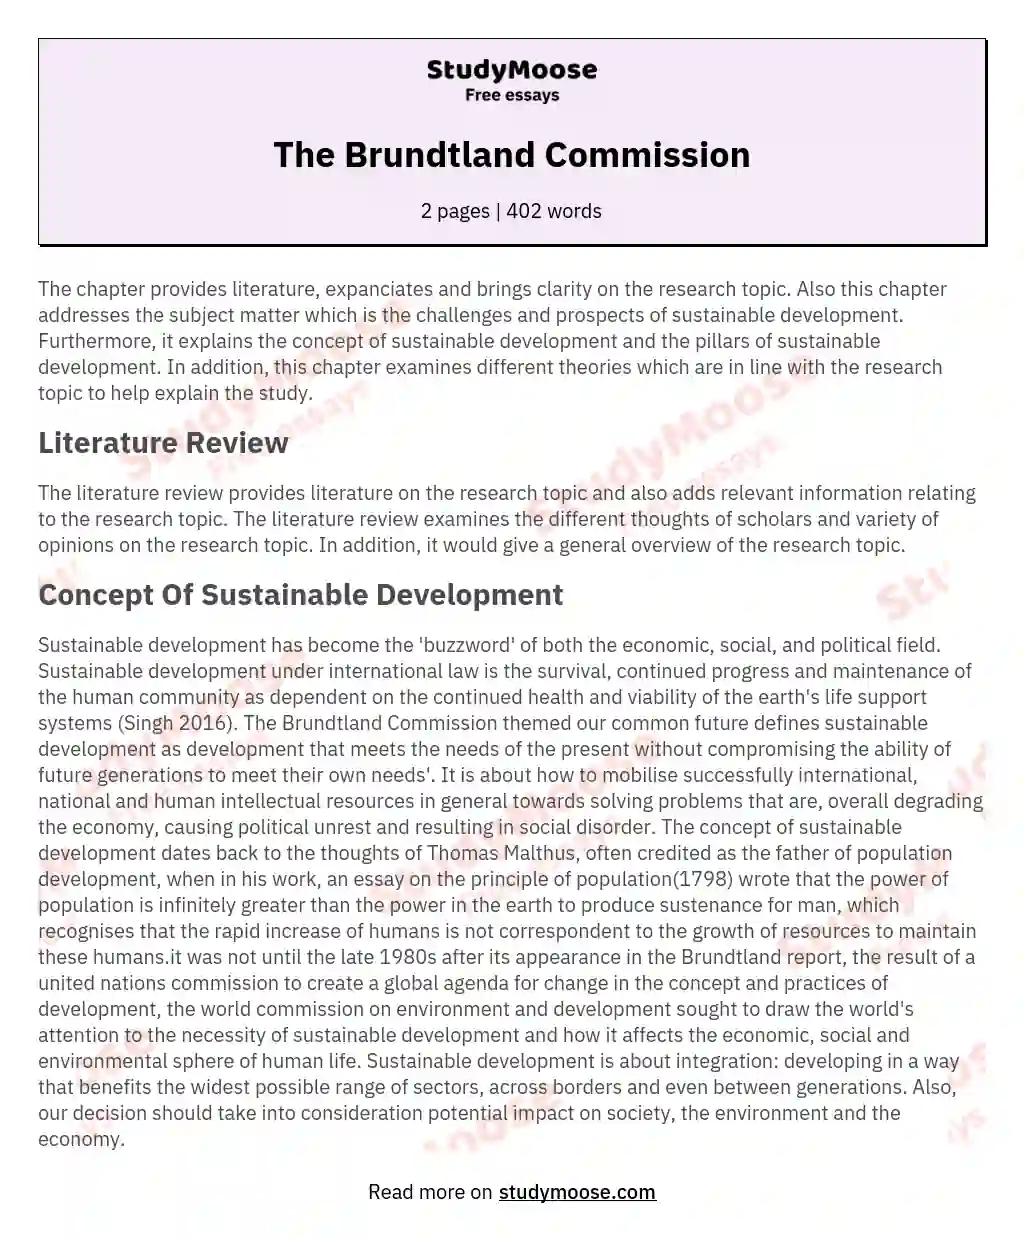 The Brundtland Commission